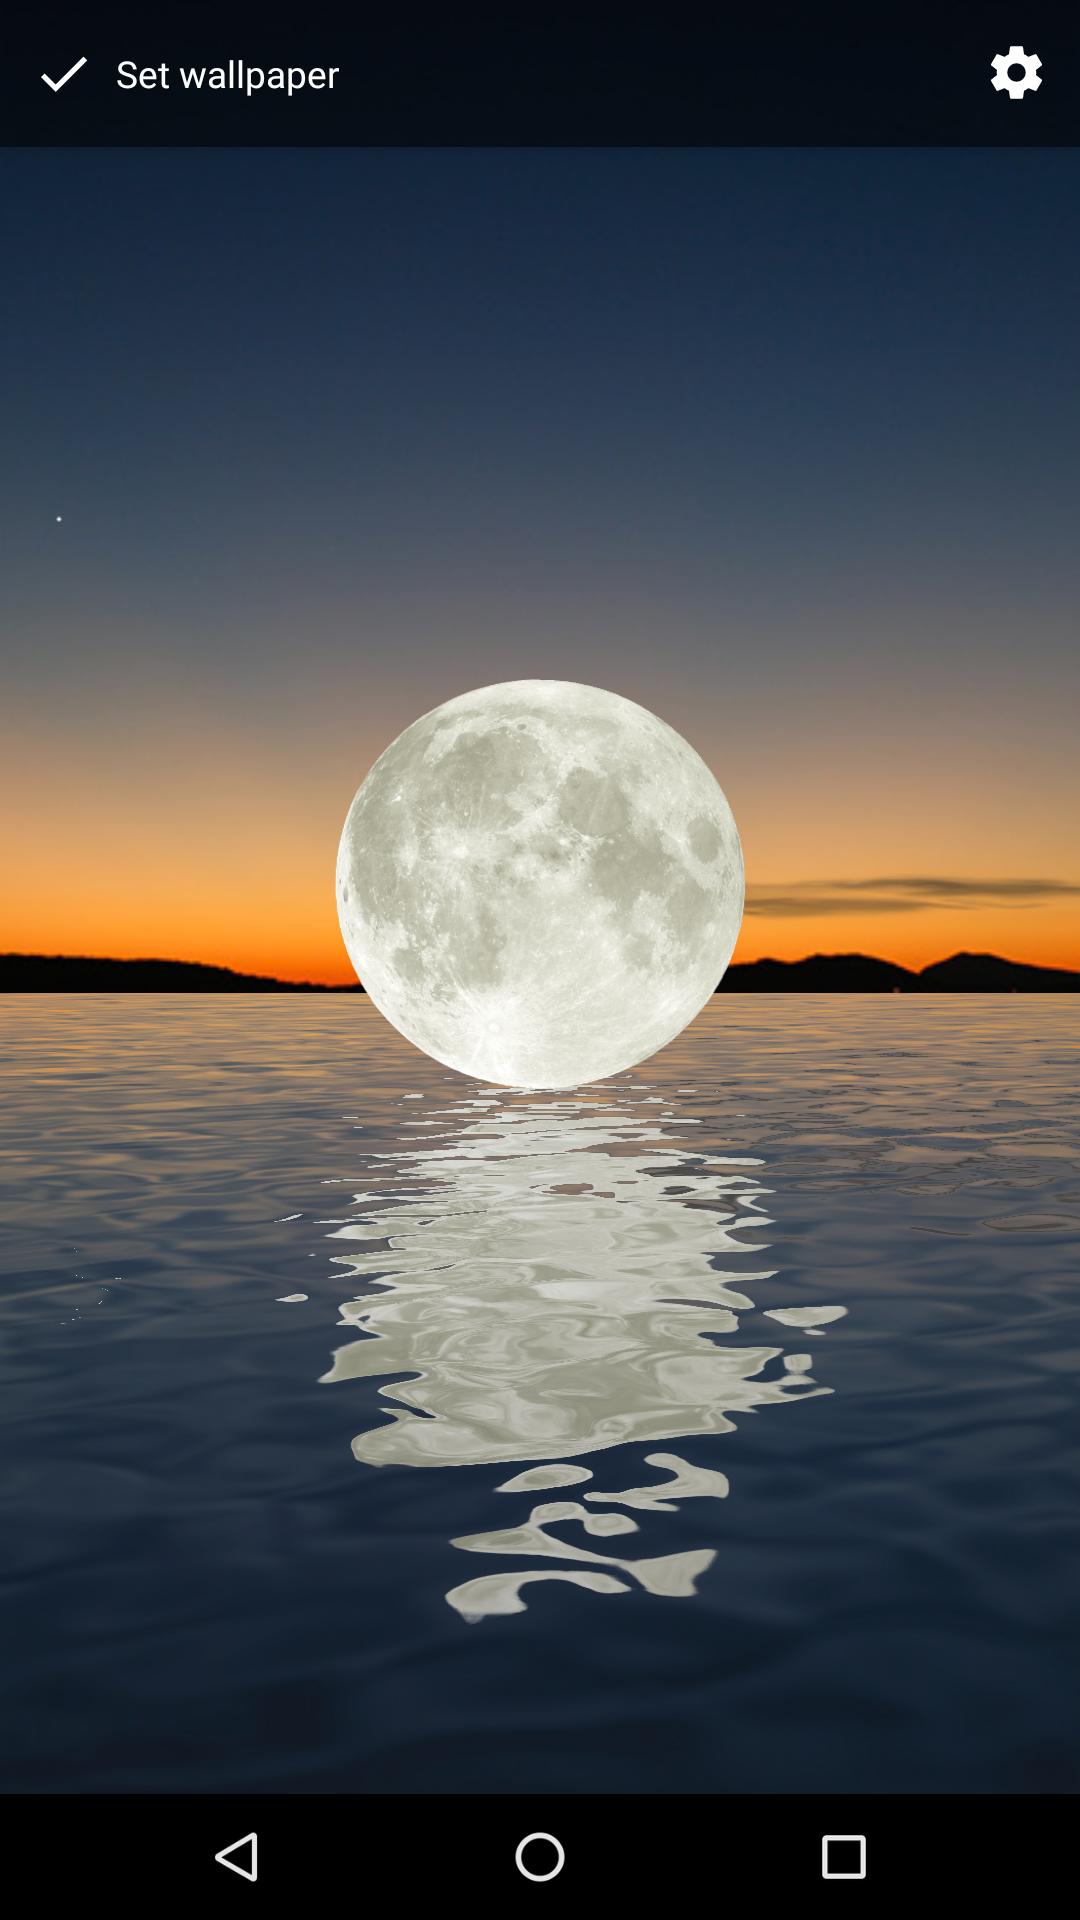 Moon Over Water Live Wallpaper